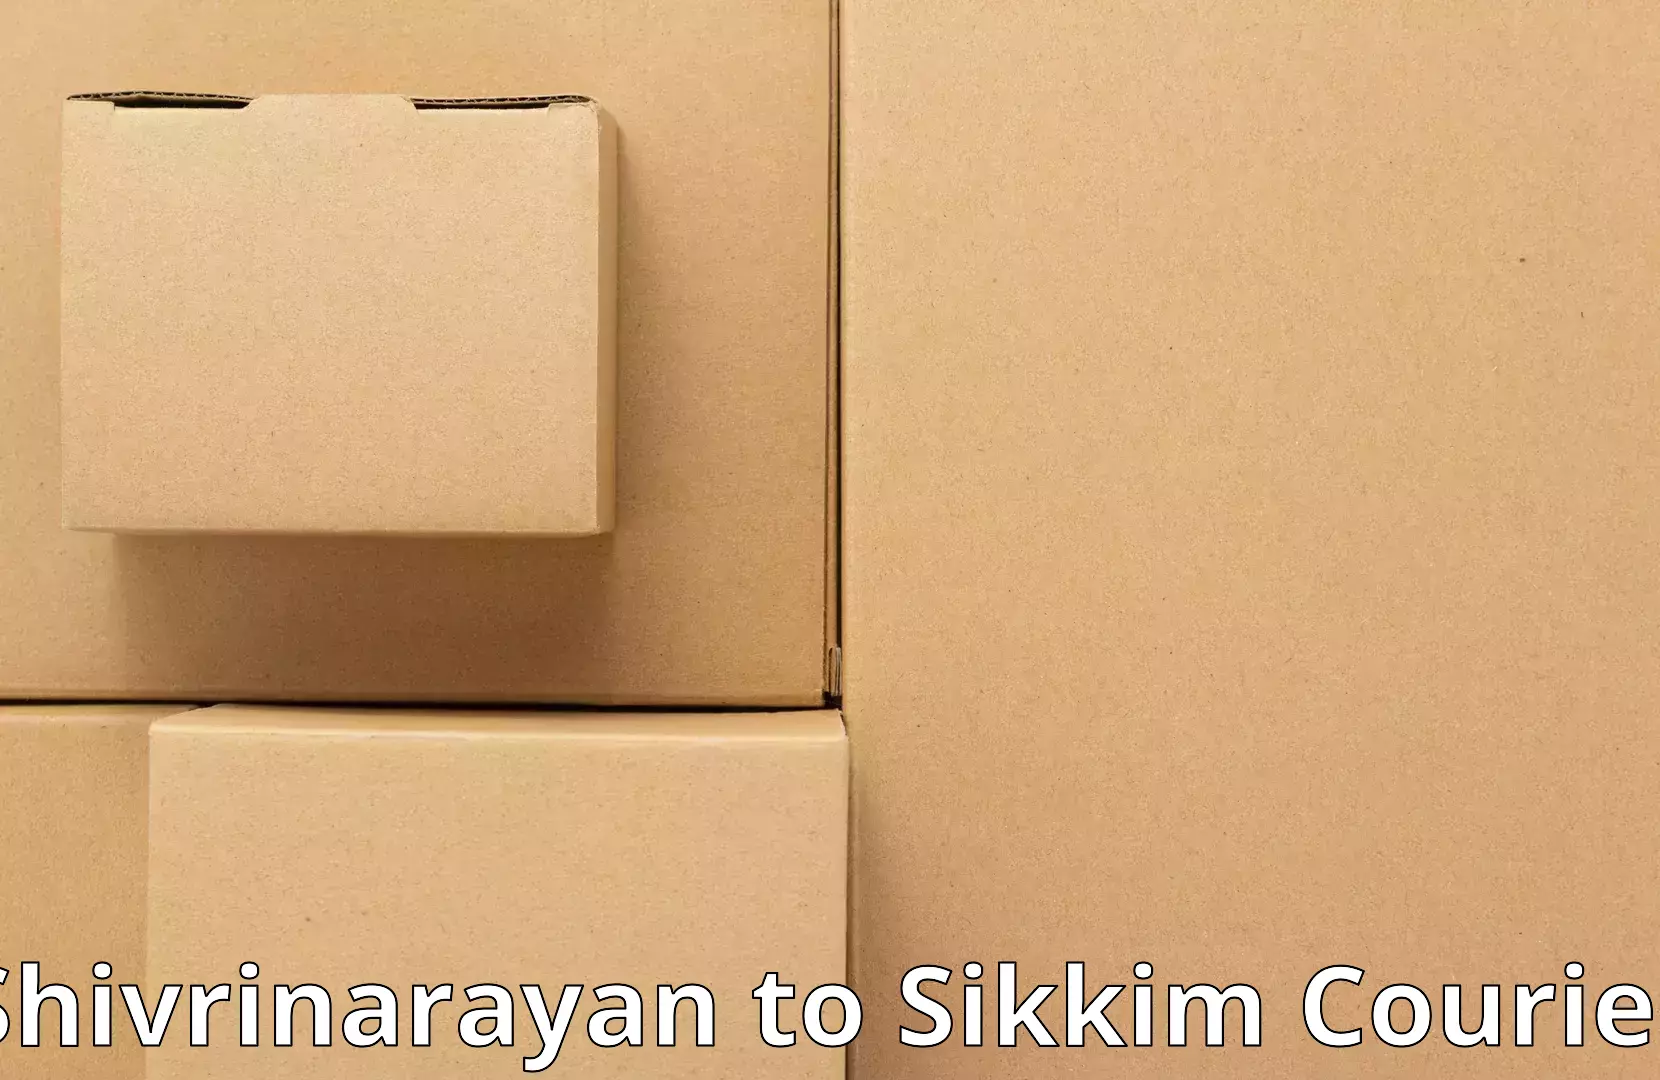 Professional movers Shivrinarayan to North Sikkim